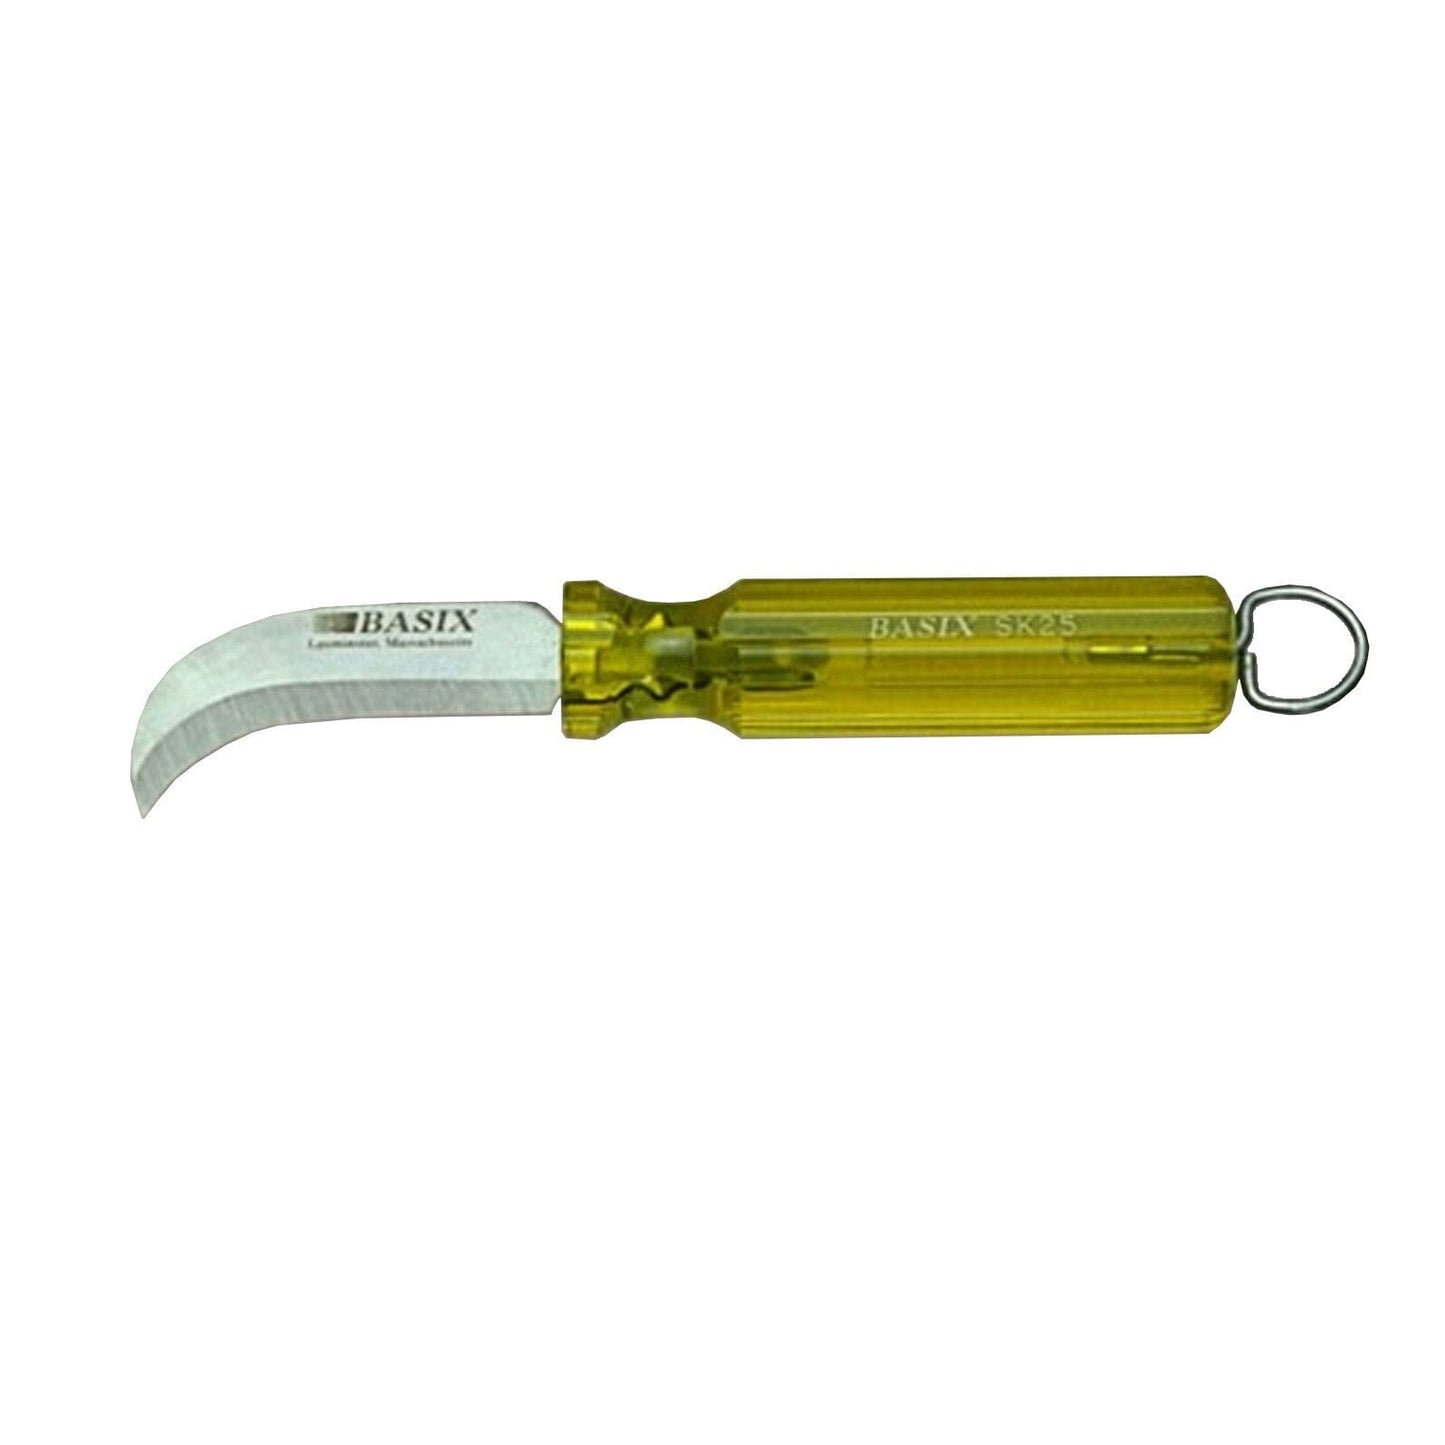 Bashlin - Skinning Knife - BSK25, Bashlin - J.L. Matthews Co., Inc.